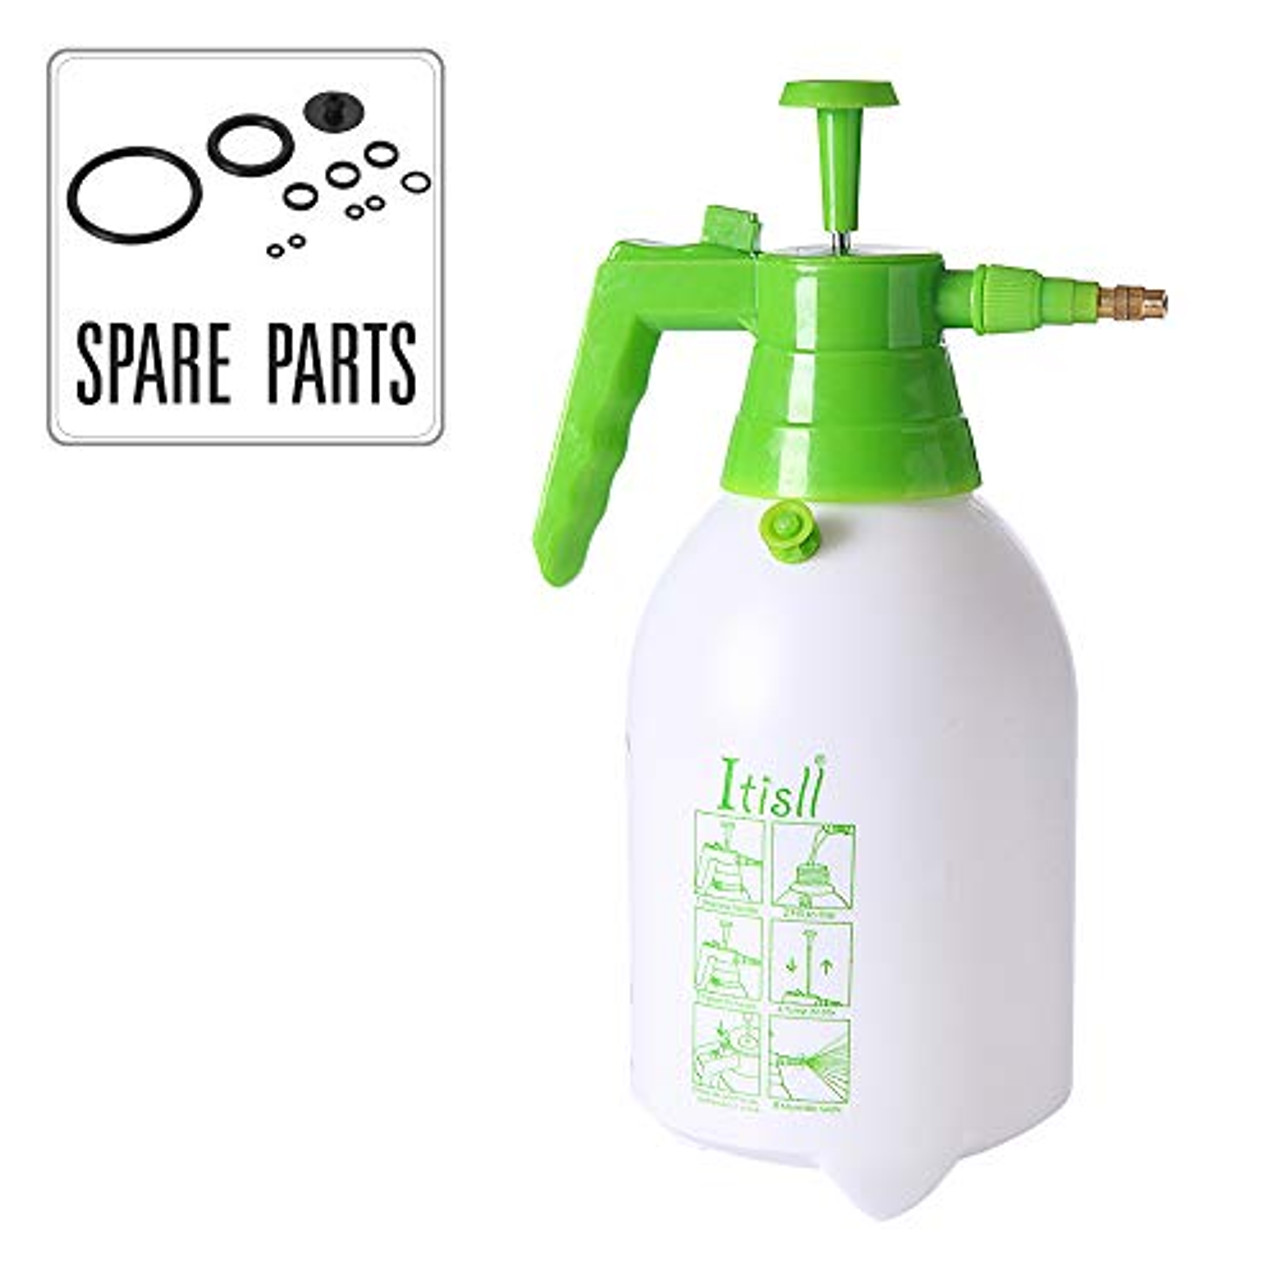 Itisll Manual Garden Sprayer Hand Lawn Pressure Pump Sprayer Safety Valve Adjustable Brass Nozzle 0.5 Gal 2L